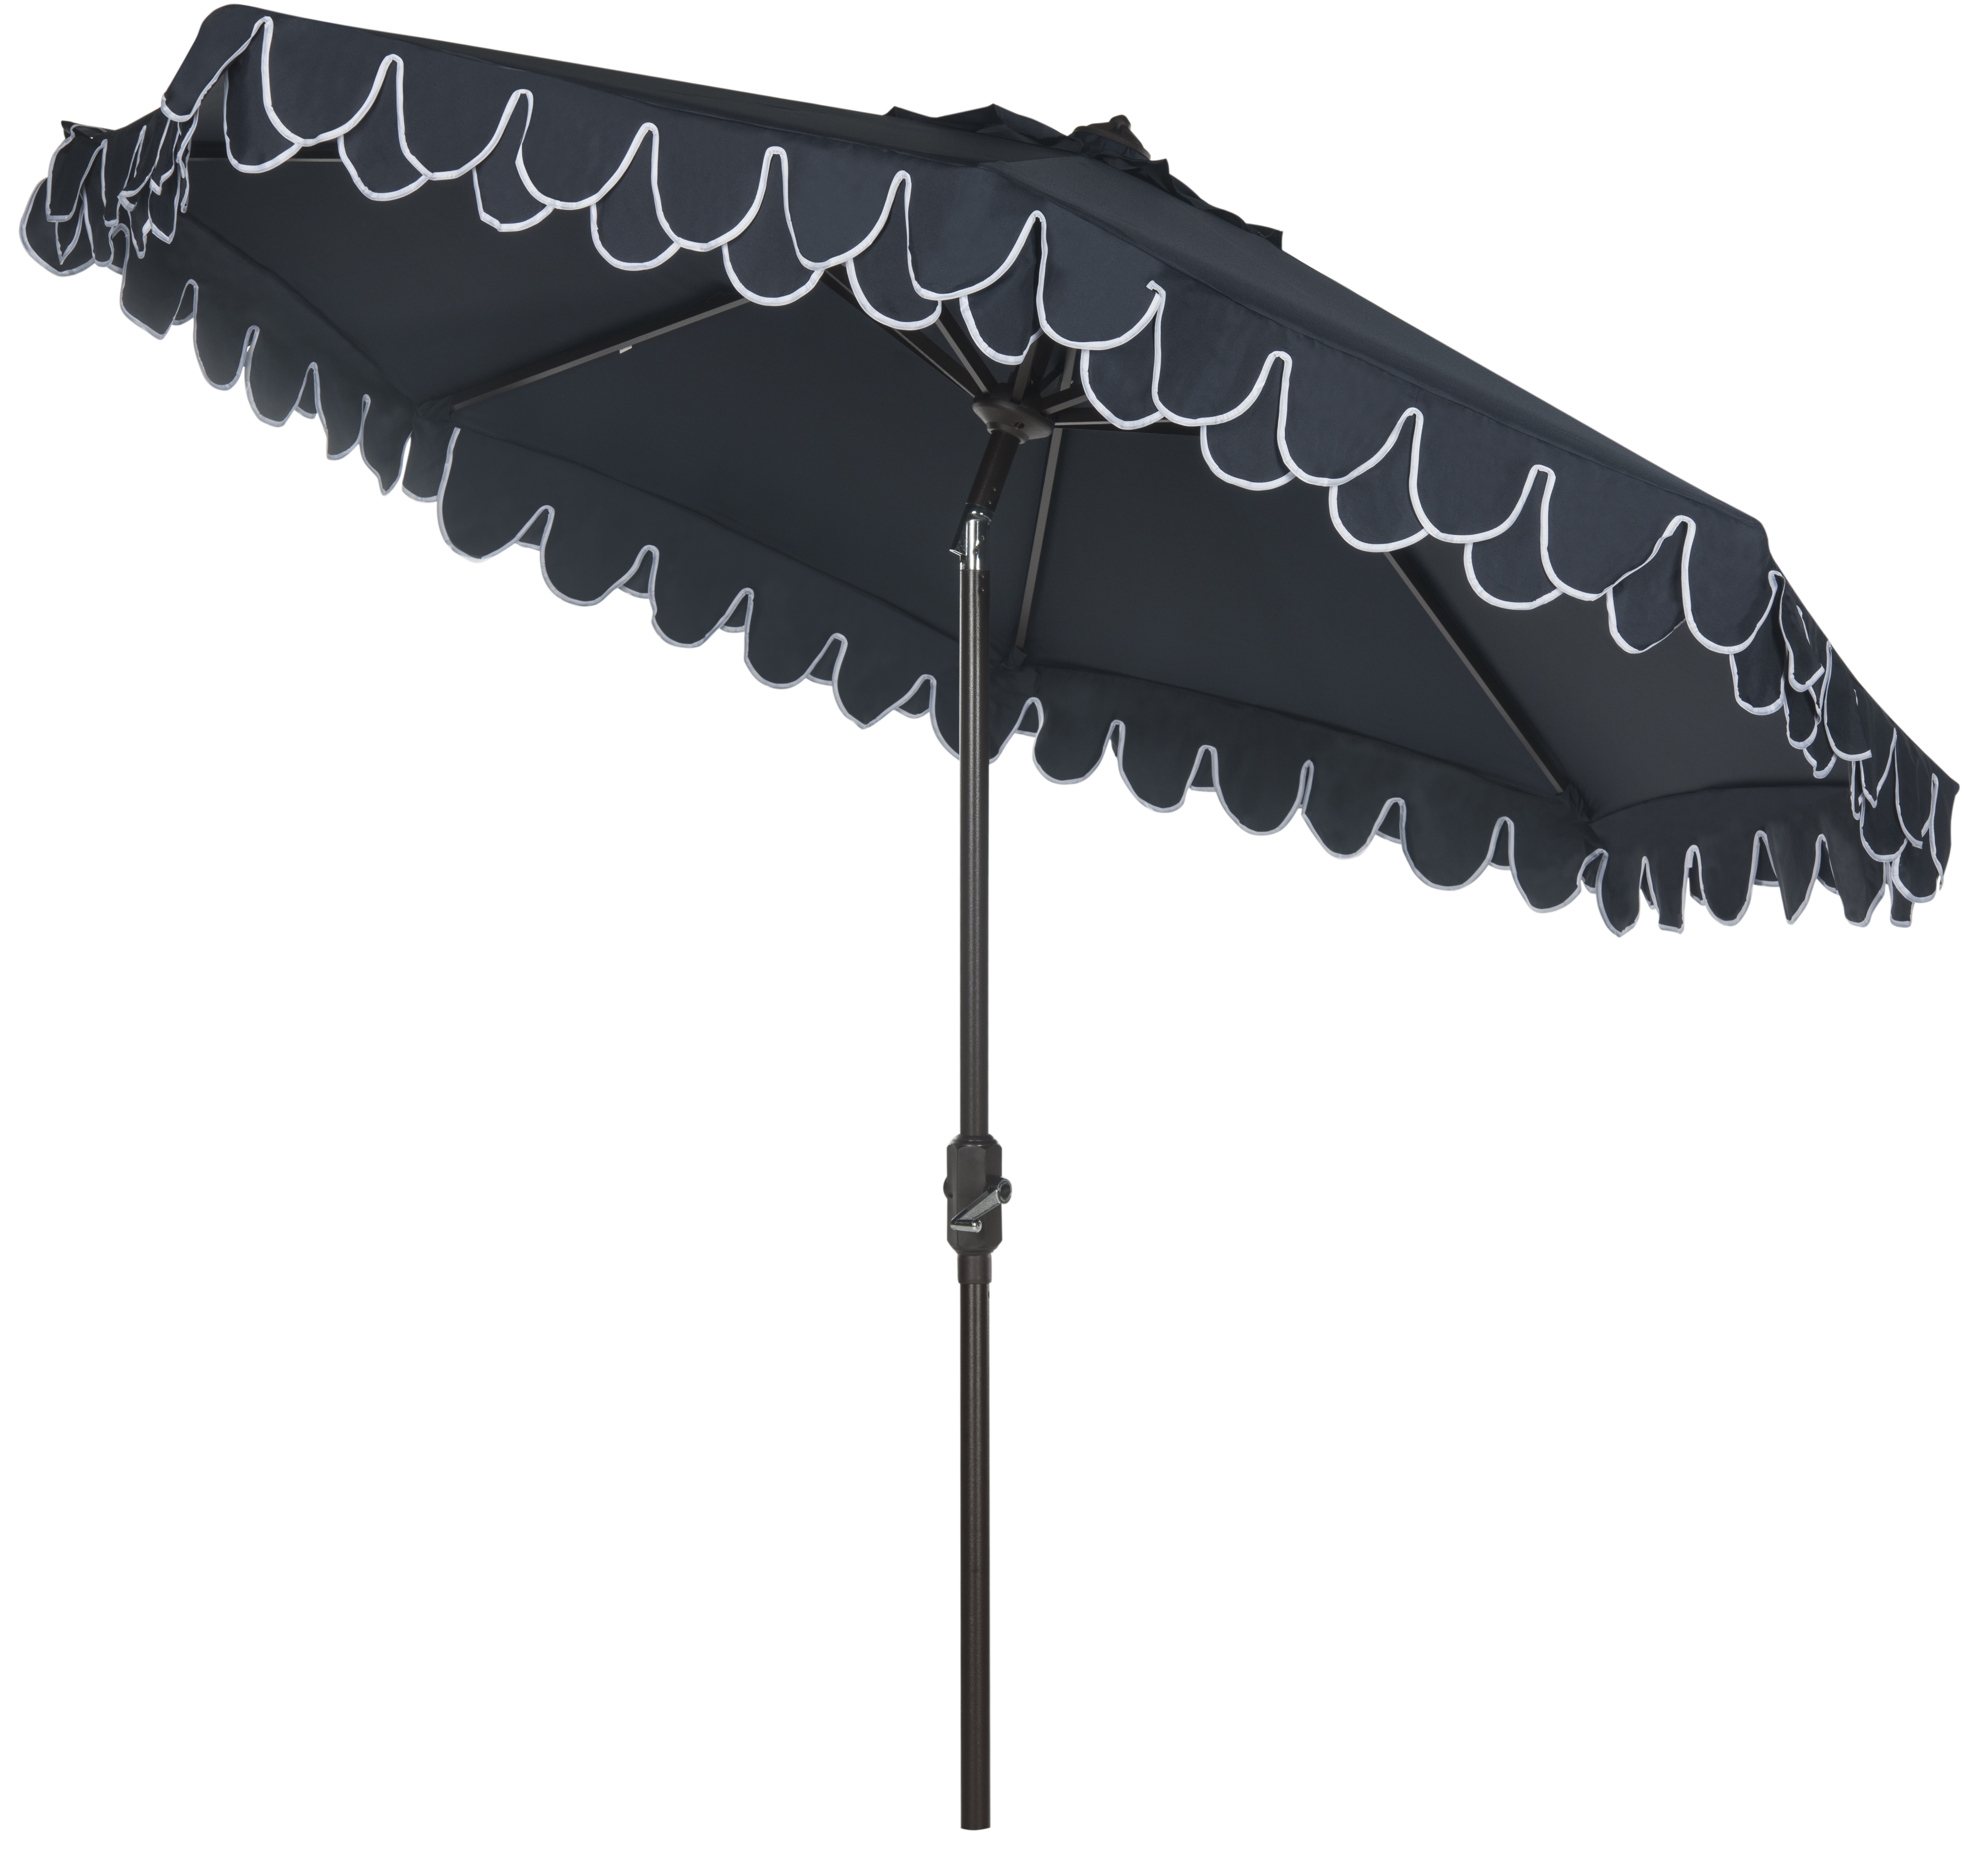 Uv Resistant Elegant Valance 9Ft Auto Tilt Umbrella - Navy/White - Arlo Home - Image 1